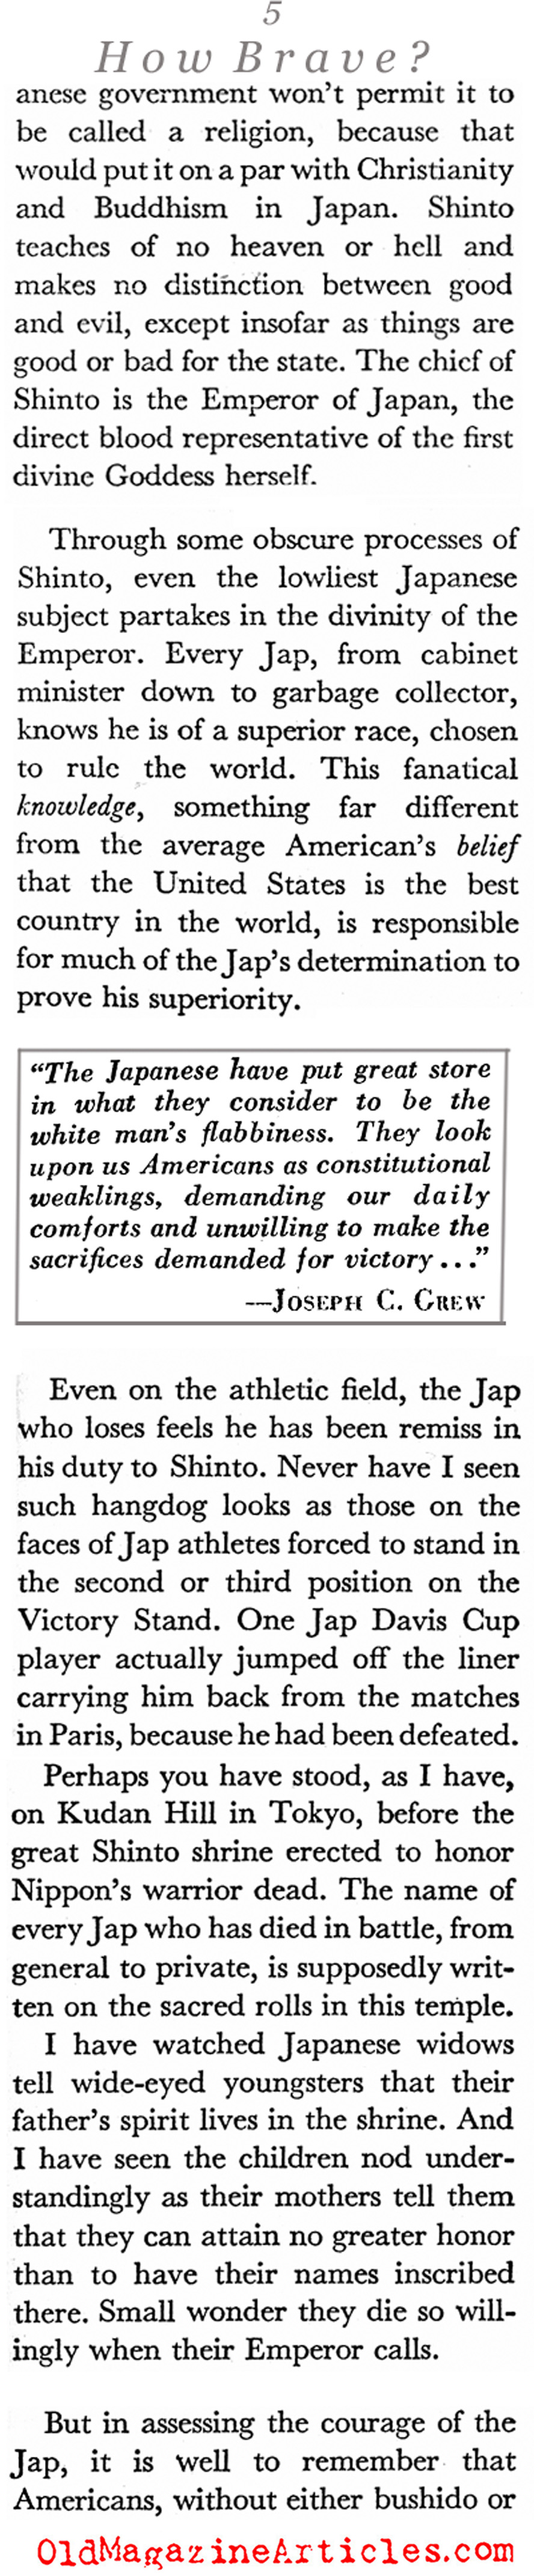 Was He Brave? (Coronet Magazine, 1943)